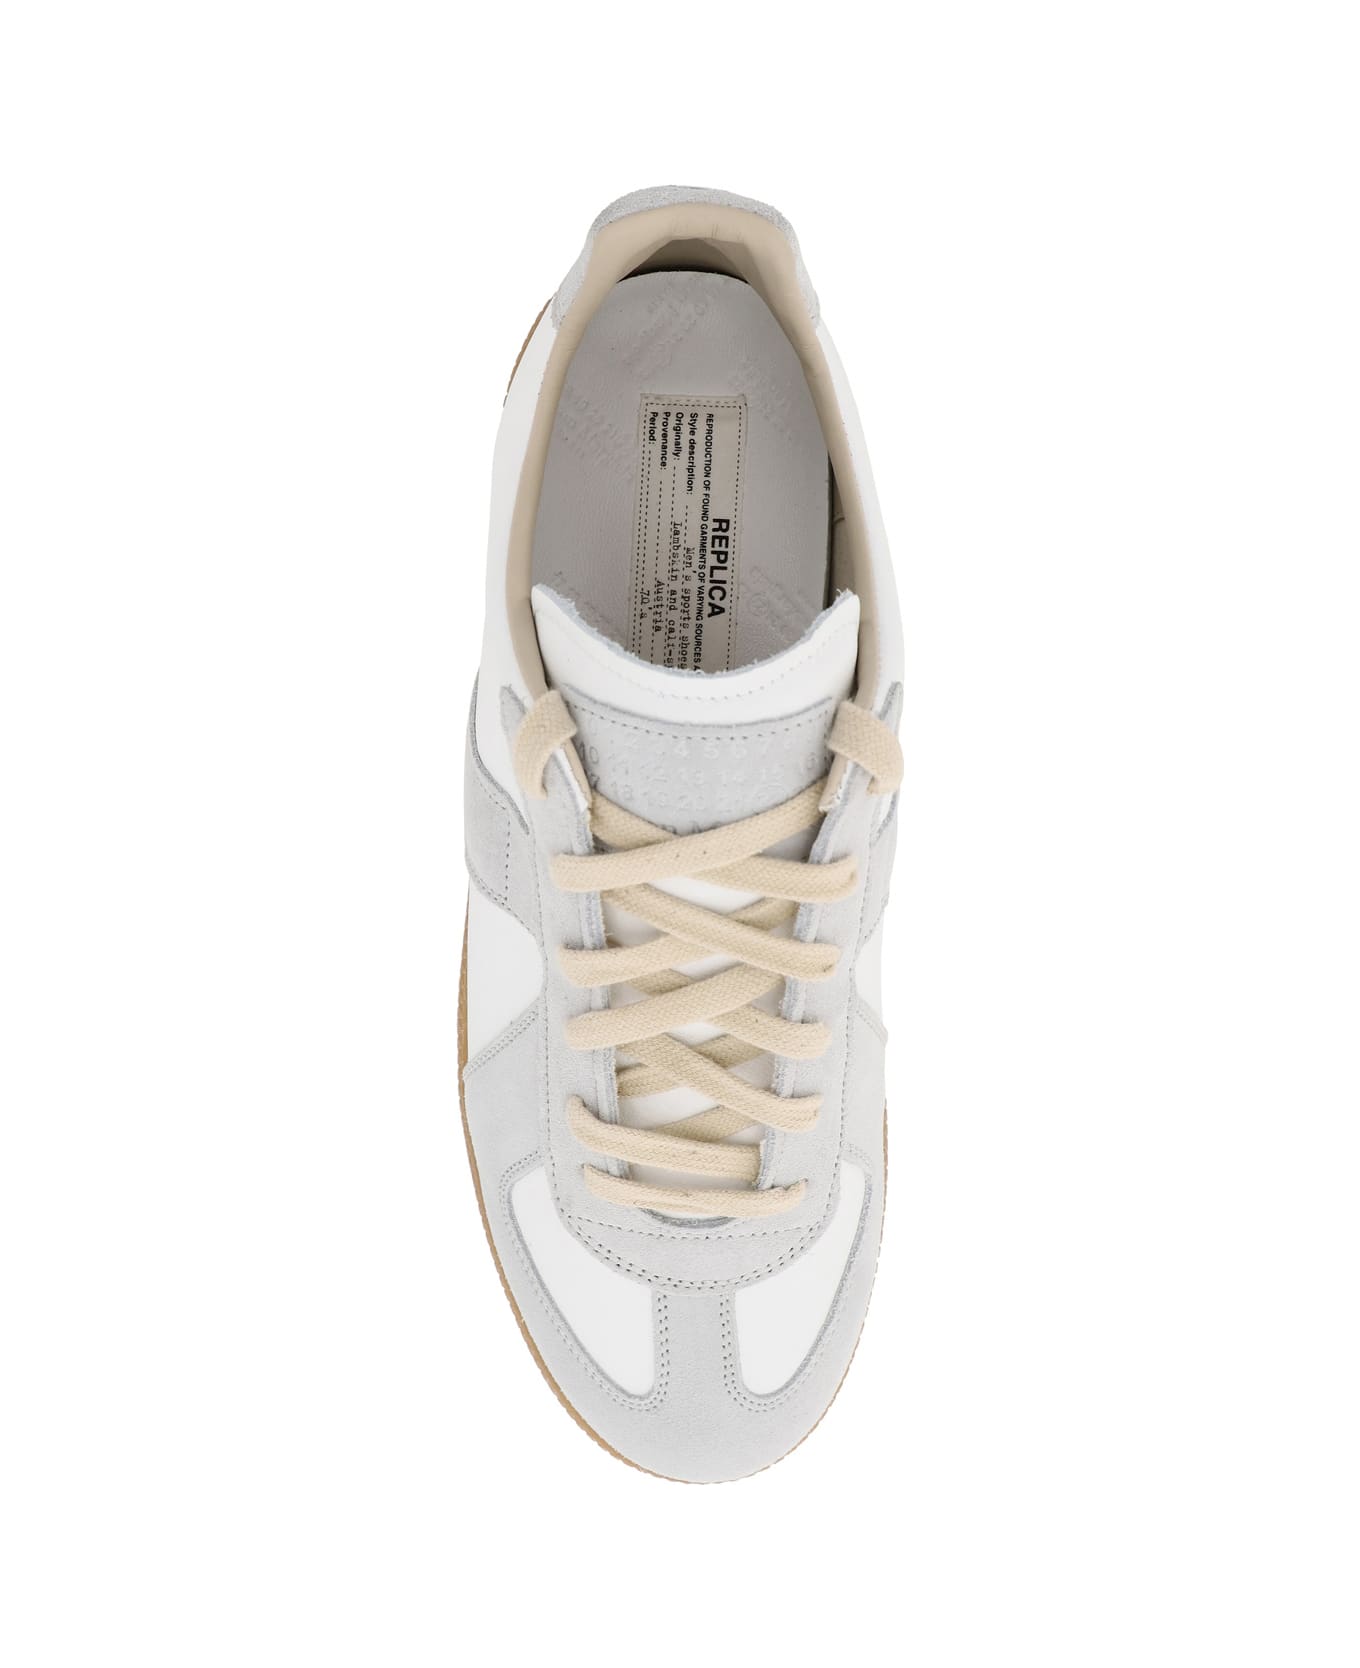 Maison Margiela Replica Leather Sneakers - White スニーカー